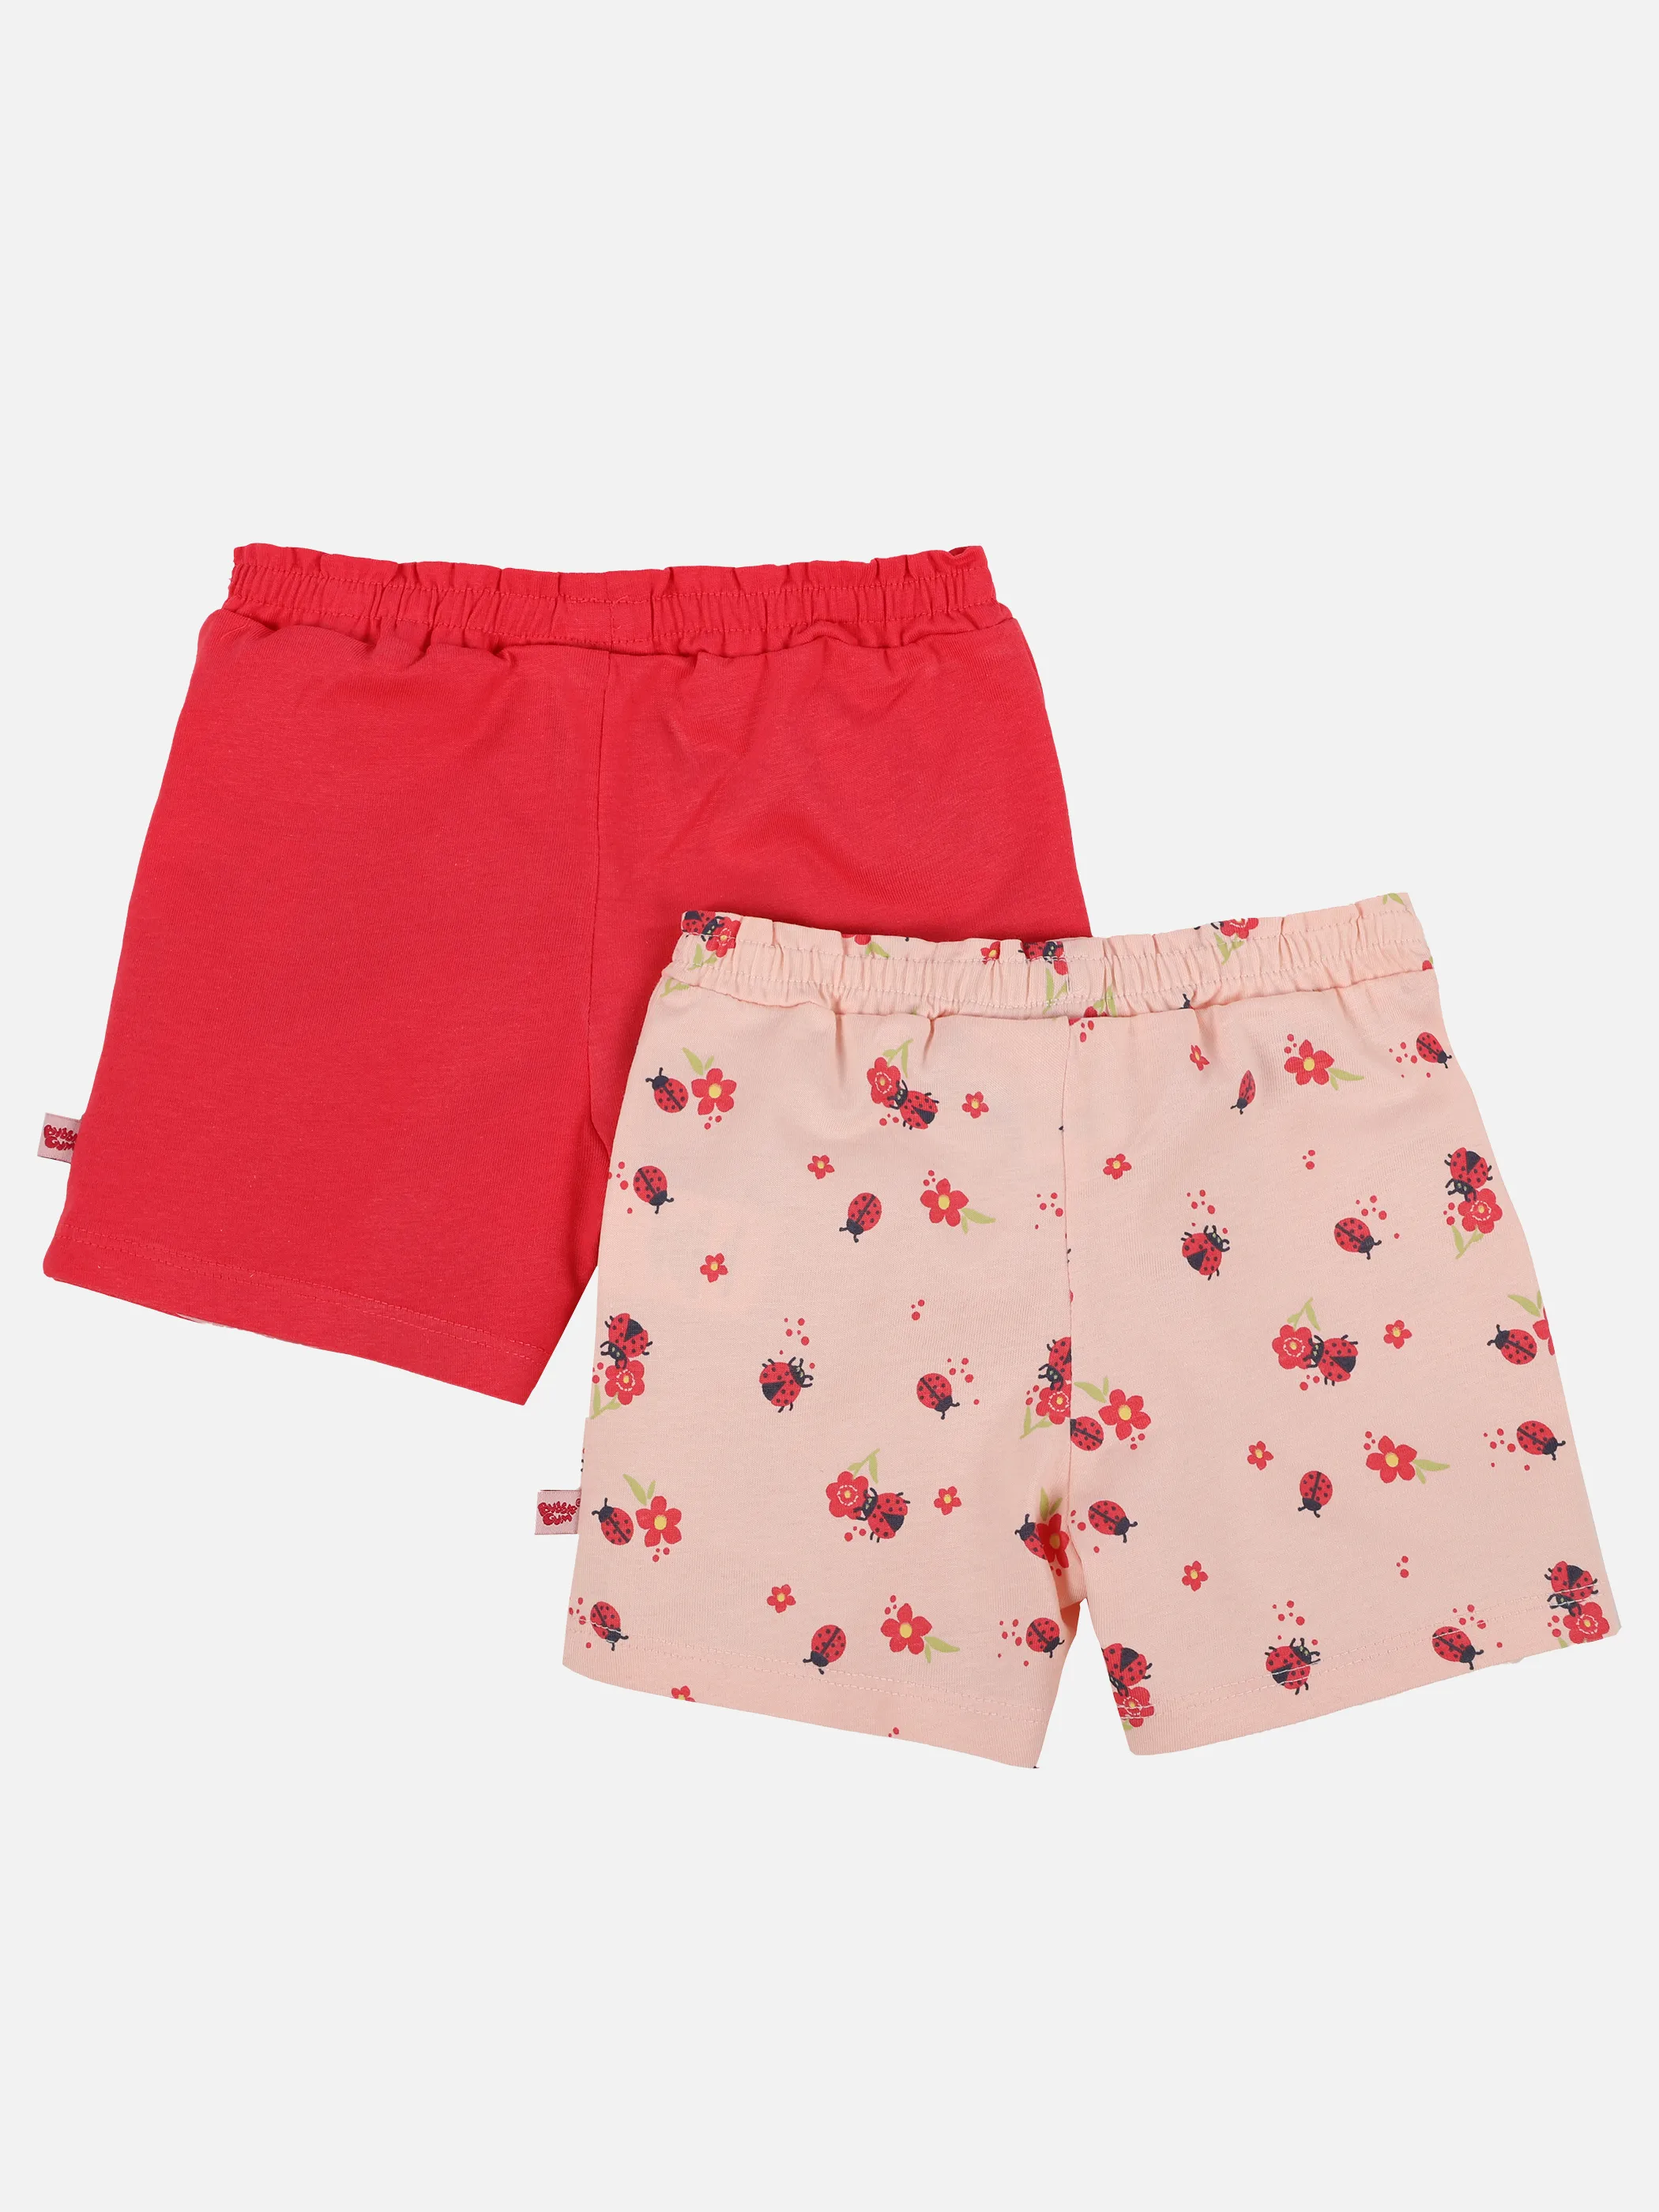 Bubble Gum BM 2er Pack Shorts in uni rot und rosa AOP Rosa 892635 ROSA/ROT 2